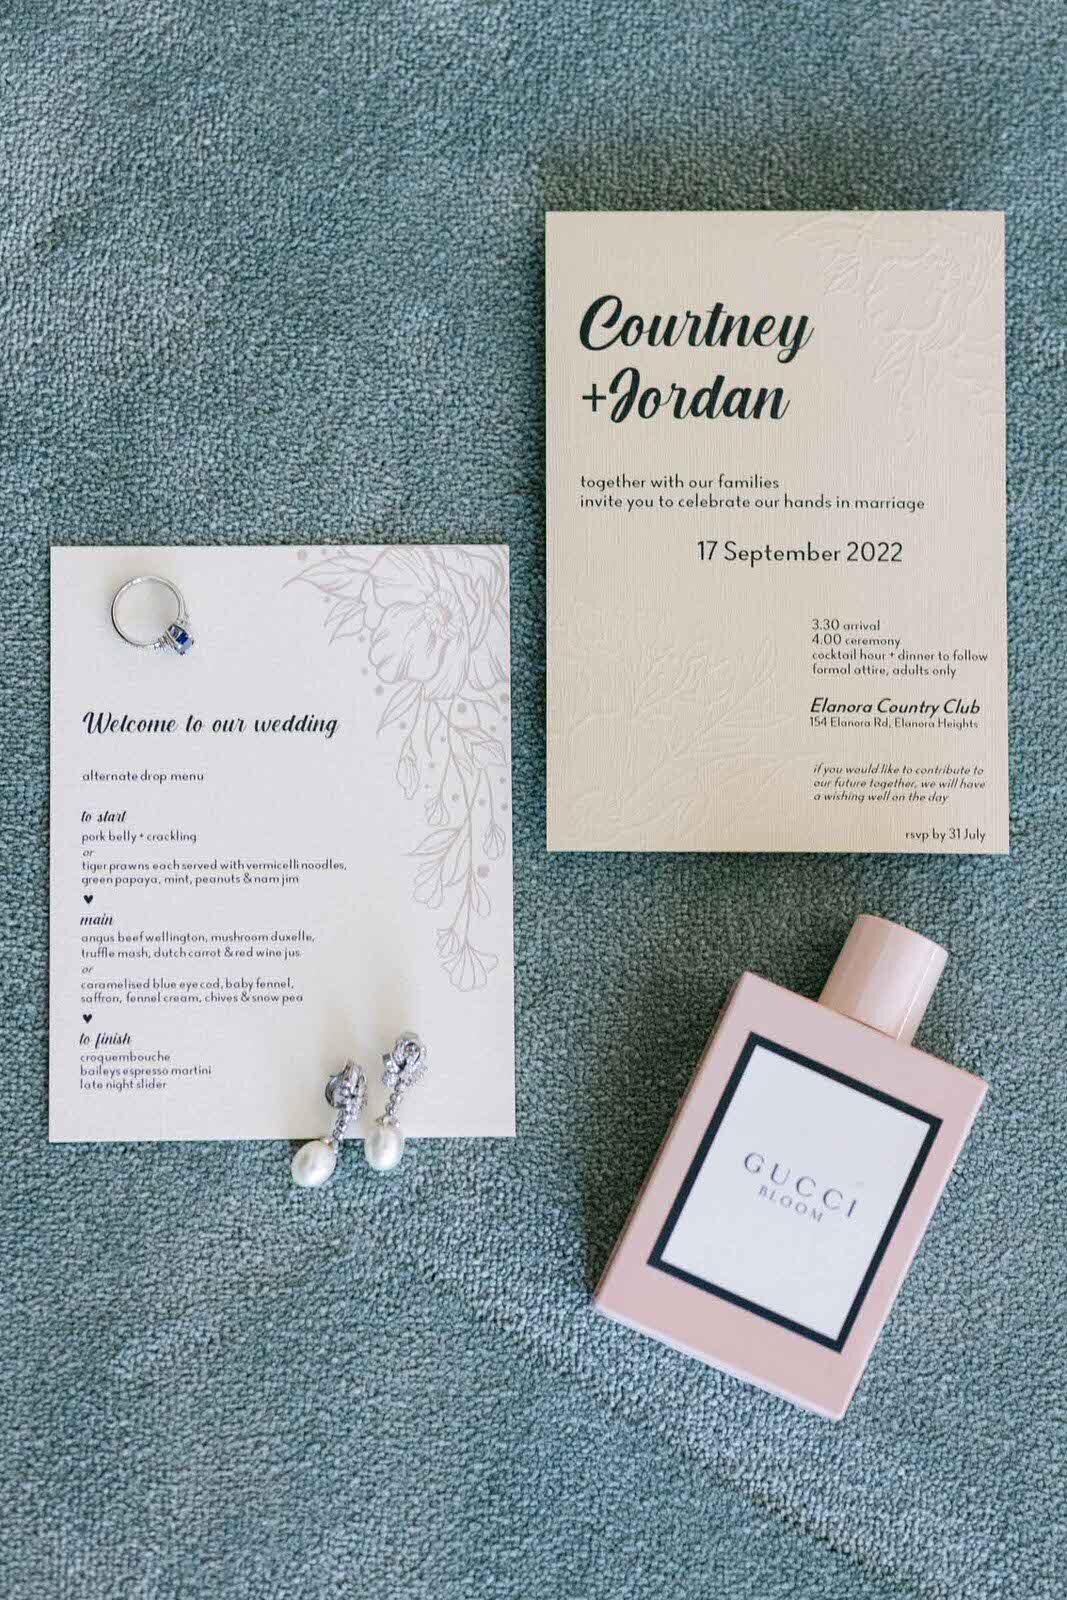 wedding invitation, bride's jewelries and perfume